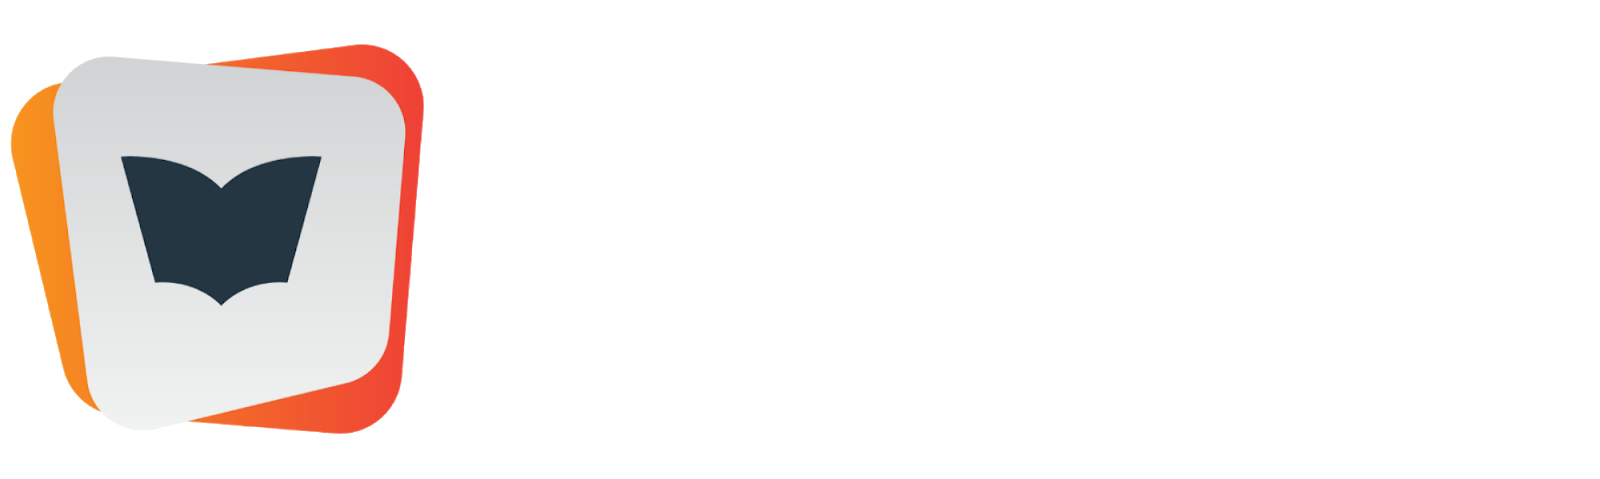 Post Pustak